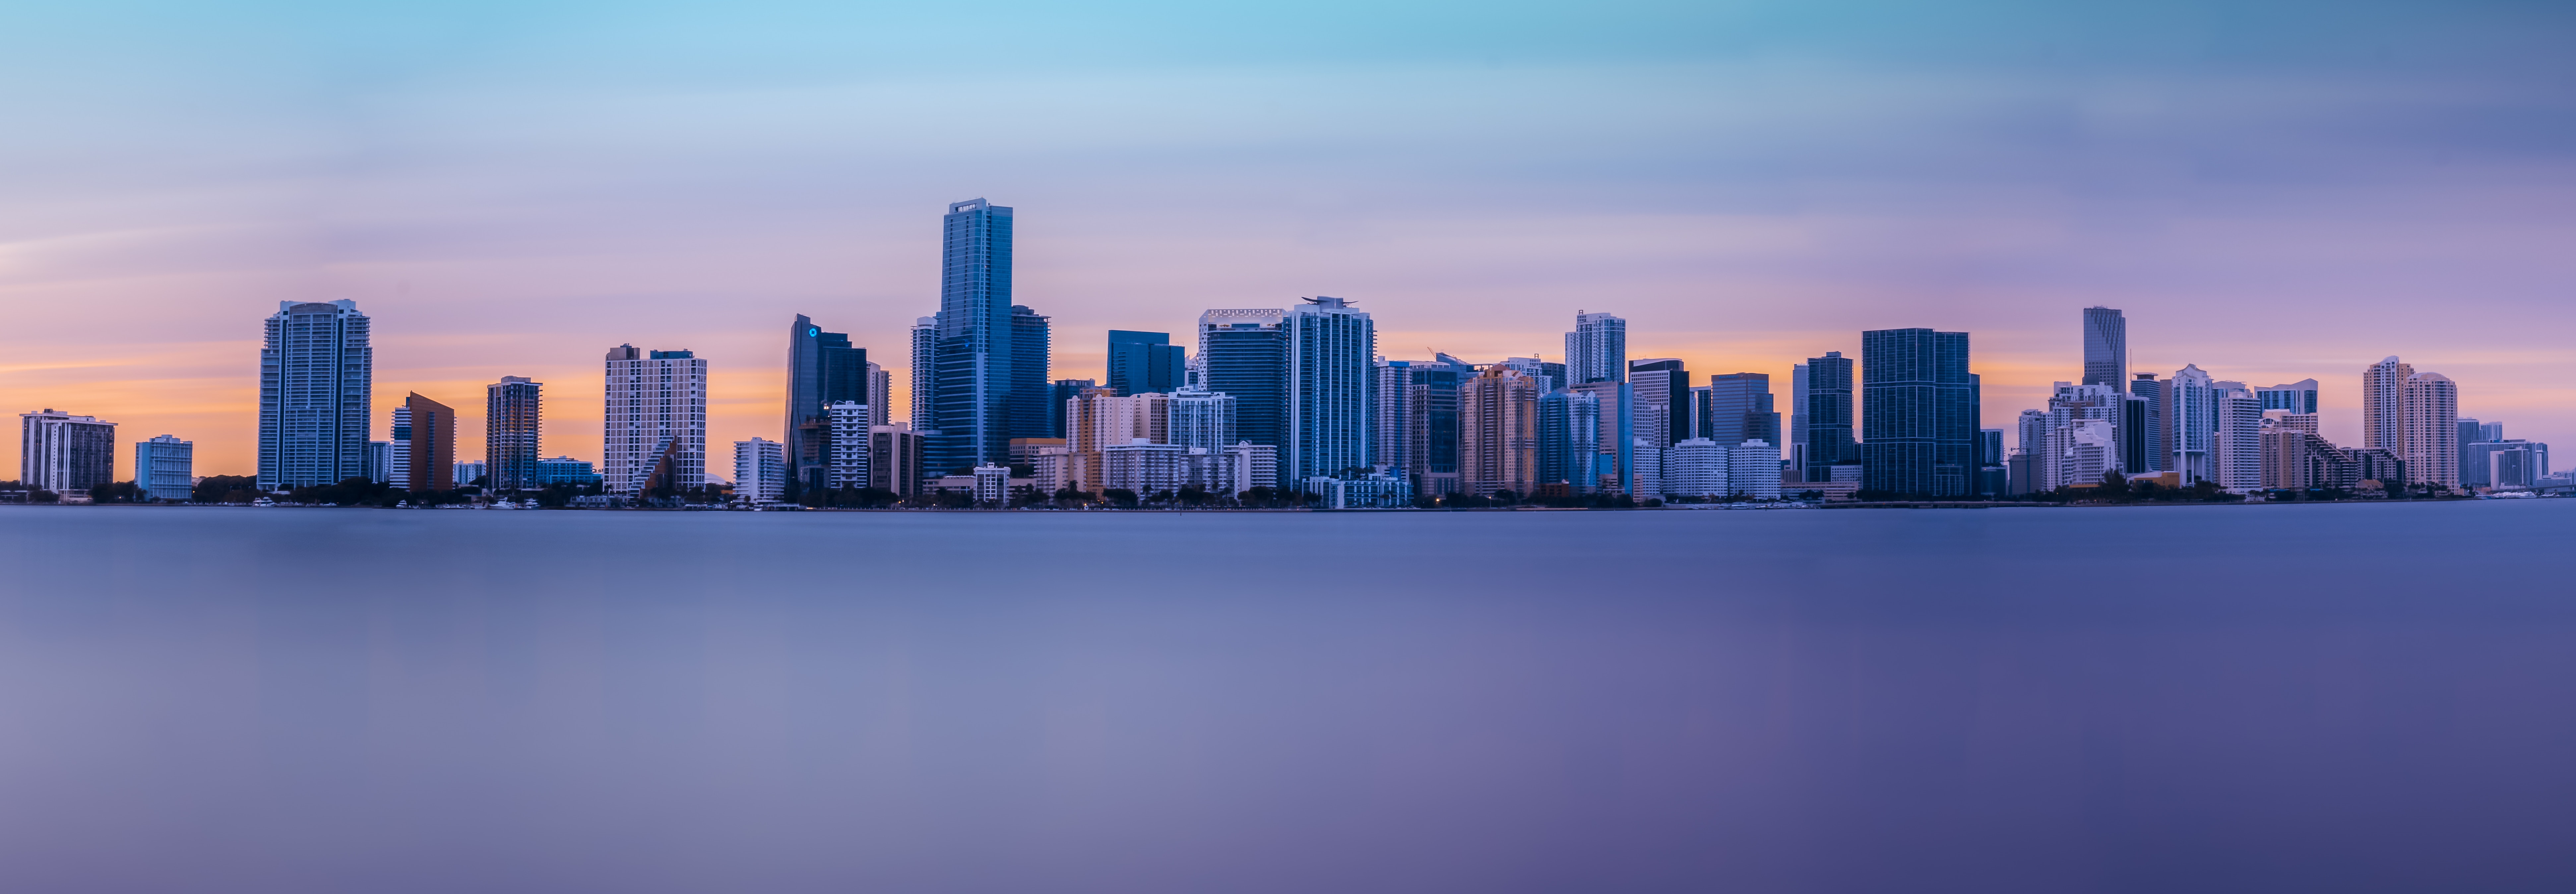 8k Miami Background